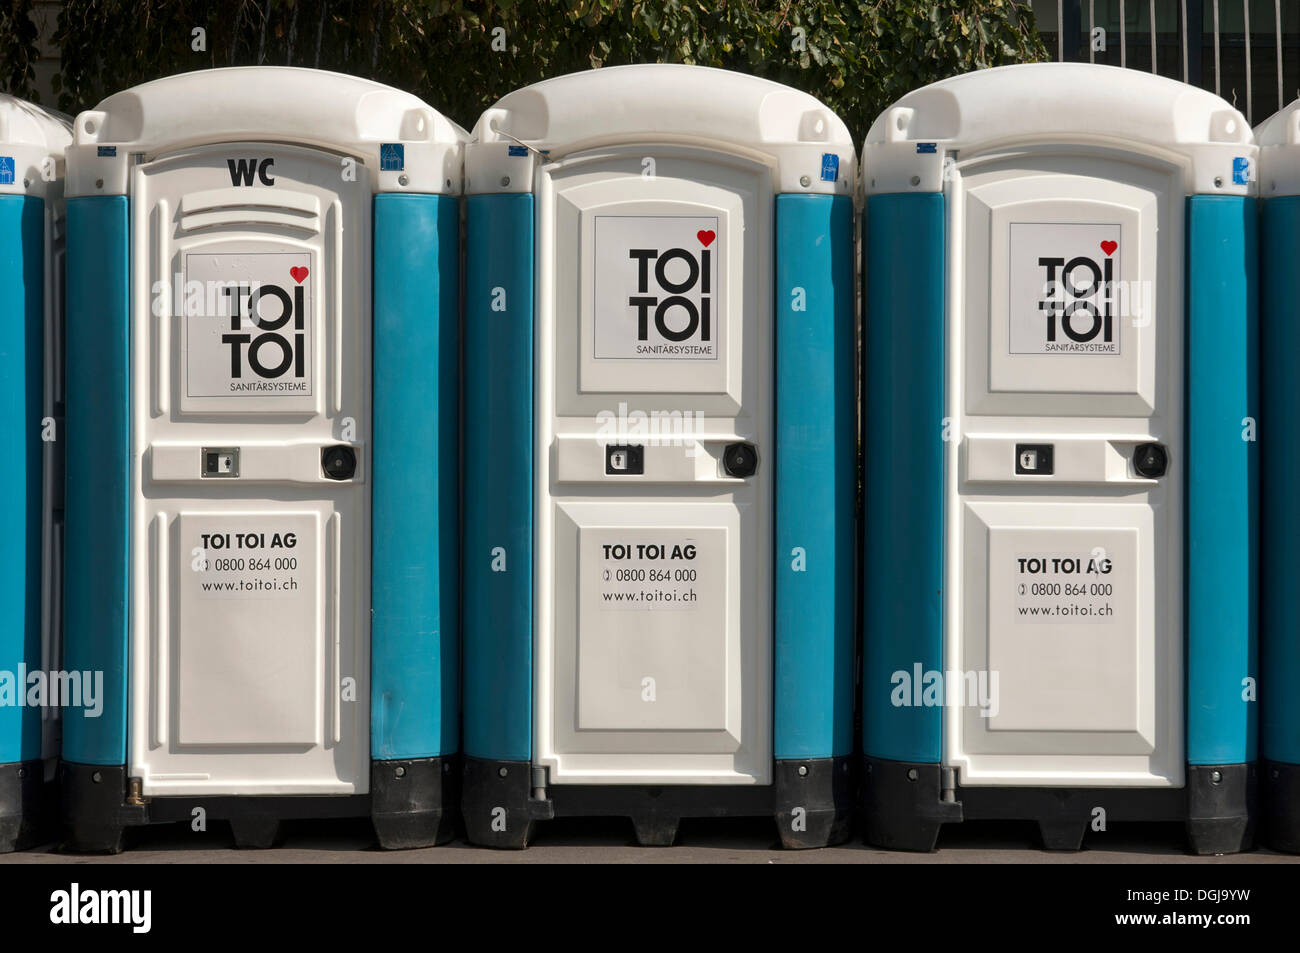 TOI TOI mobile Toiletten, Schweiz, Europa Stockfotografie - Alamy